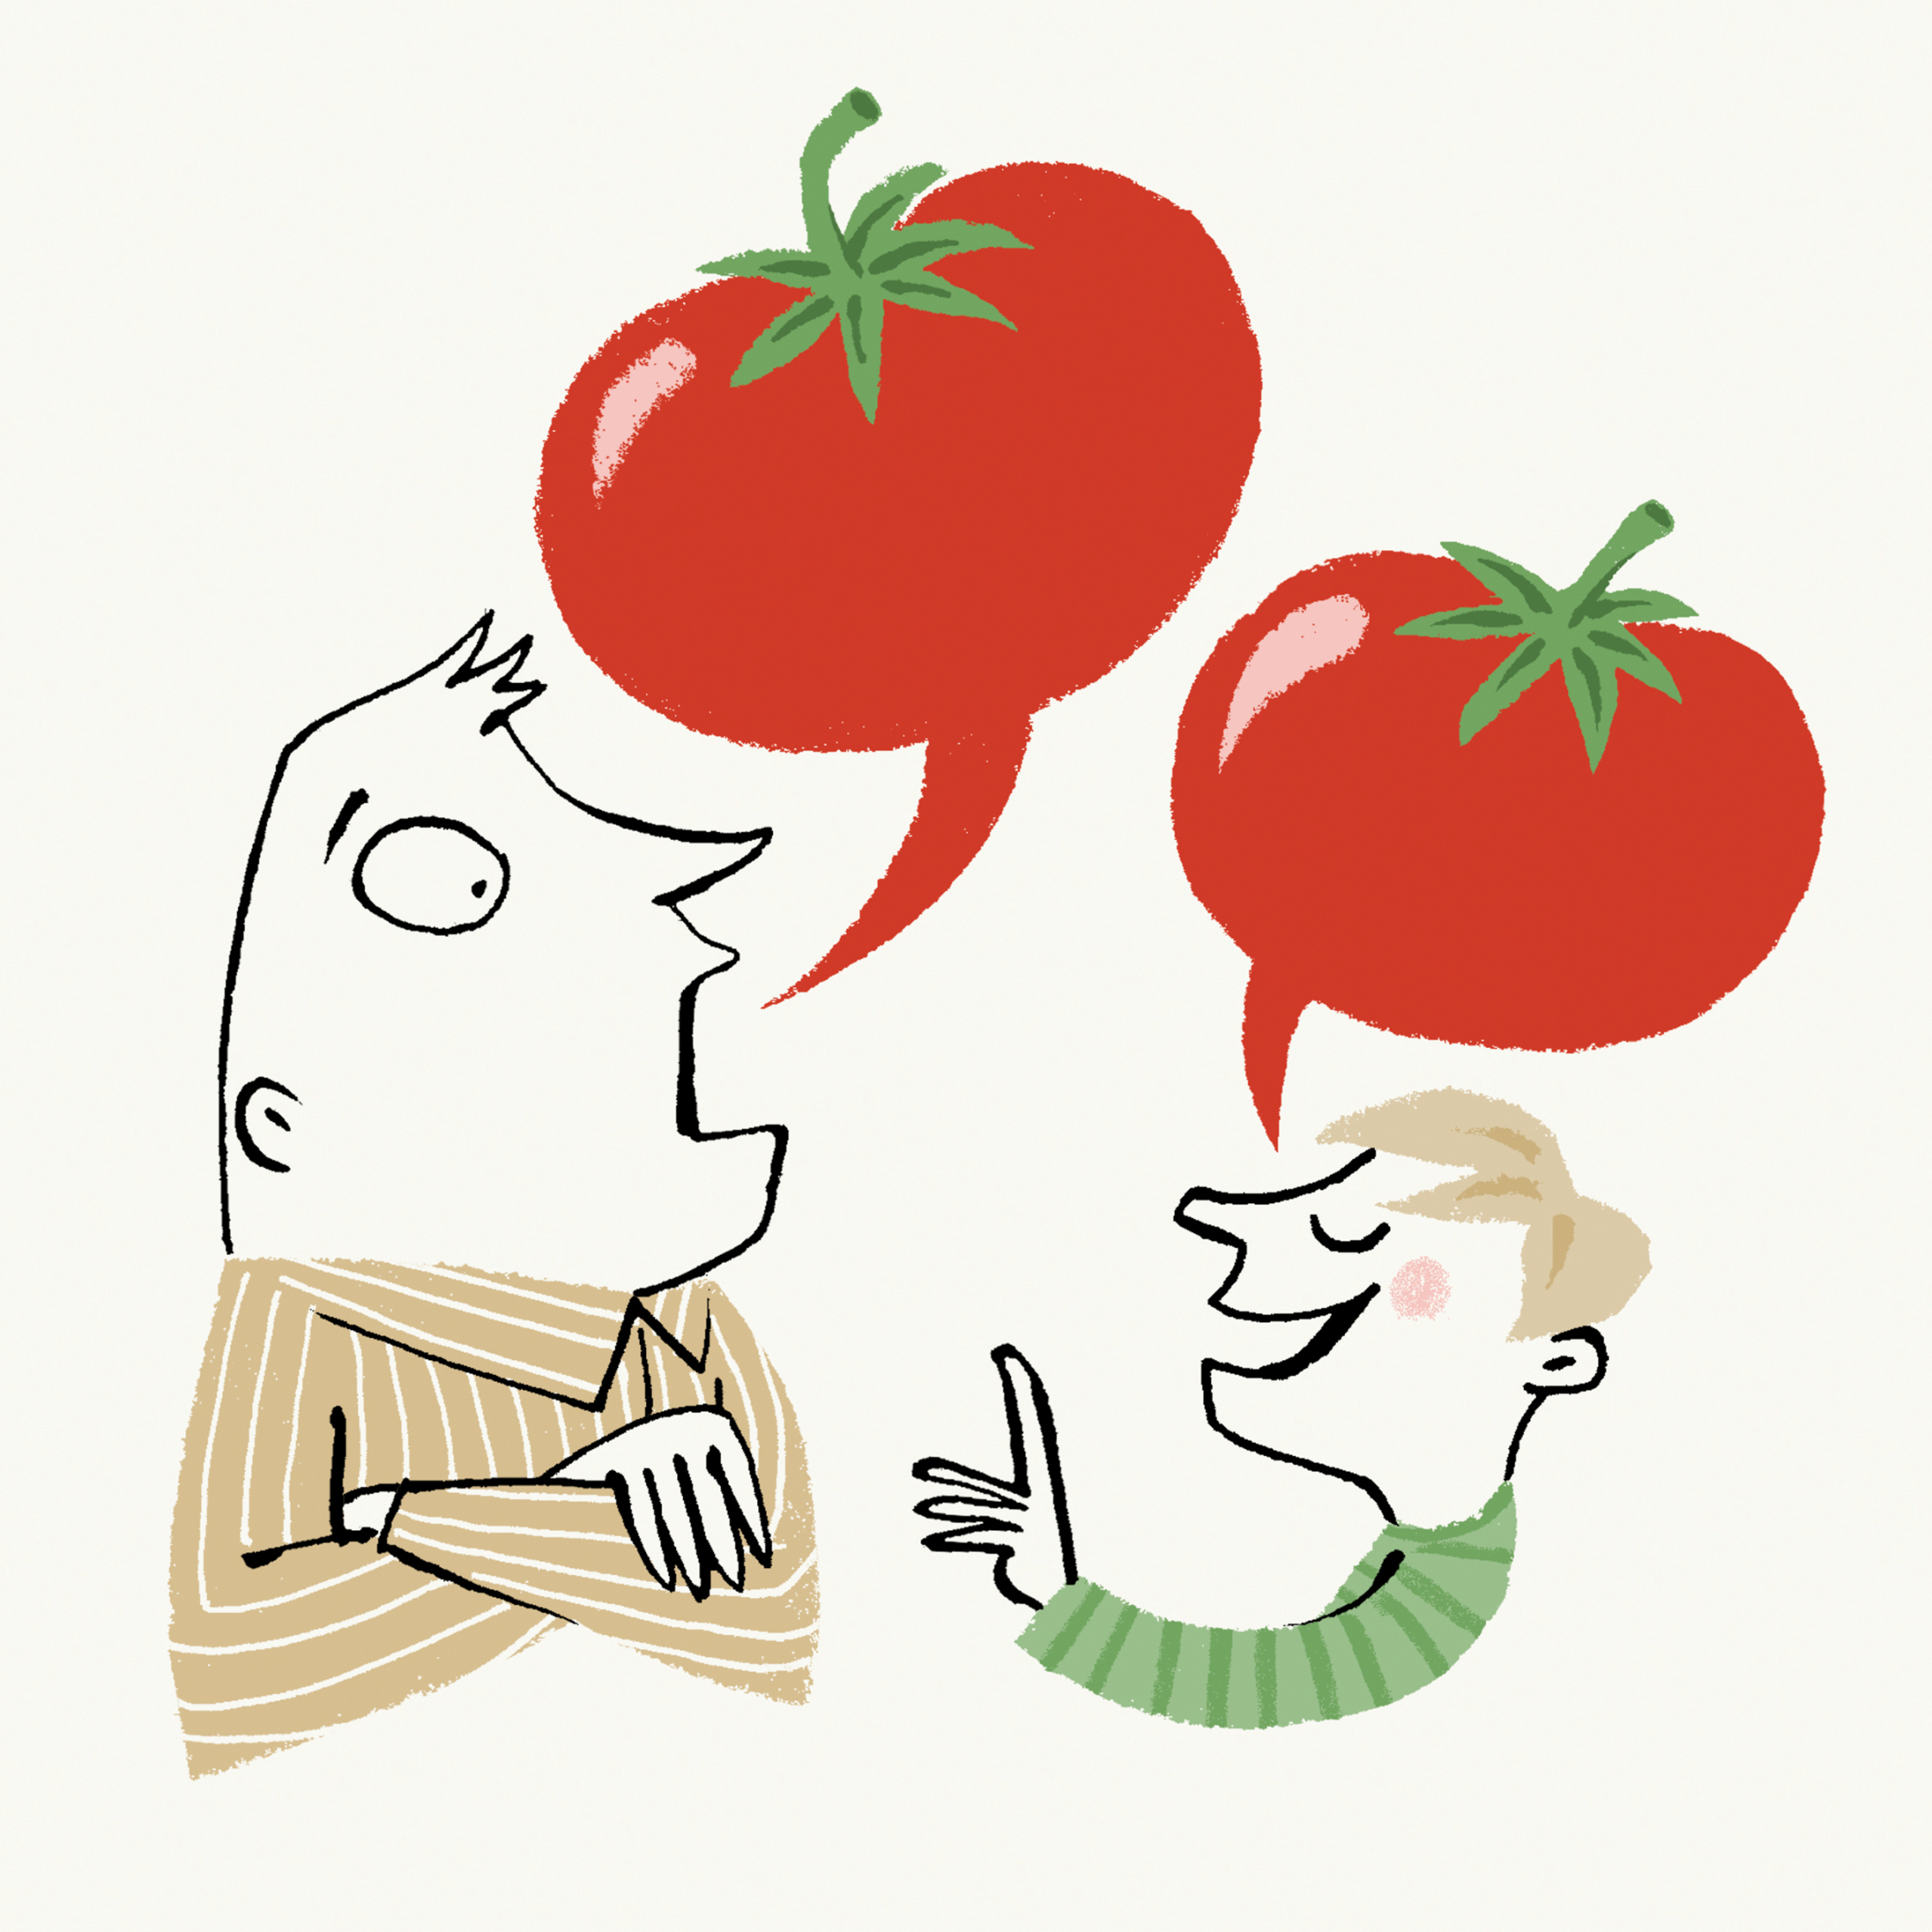 Streich-1843-Economist-British-American-English-say-tomato.jpg